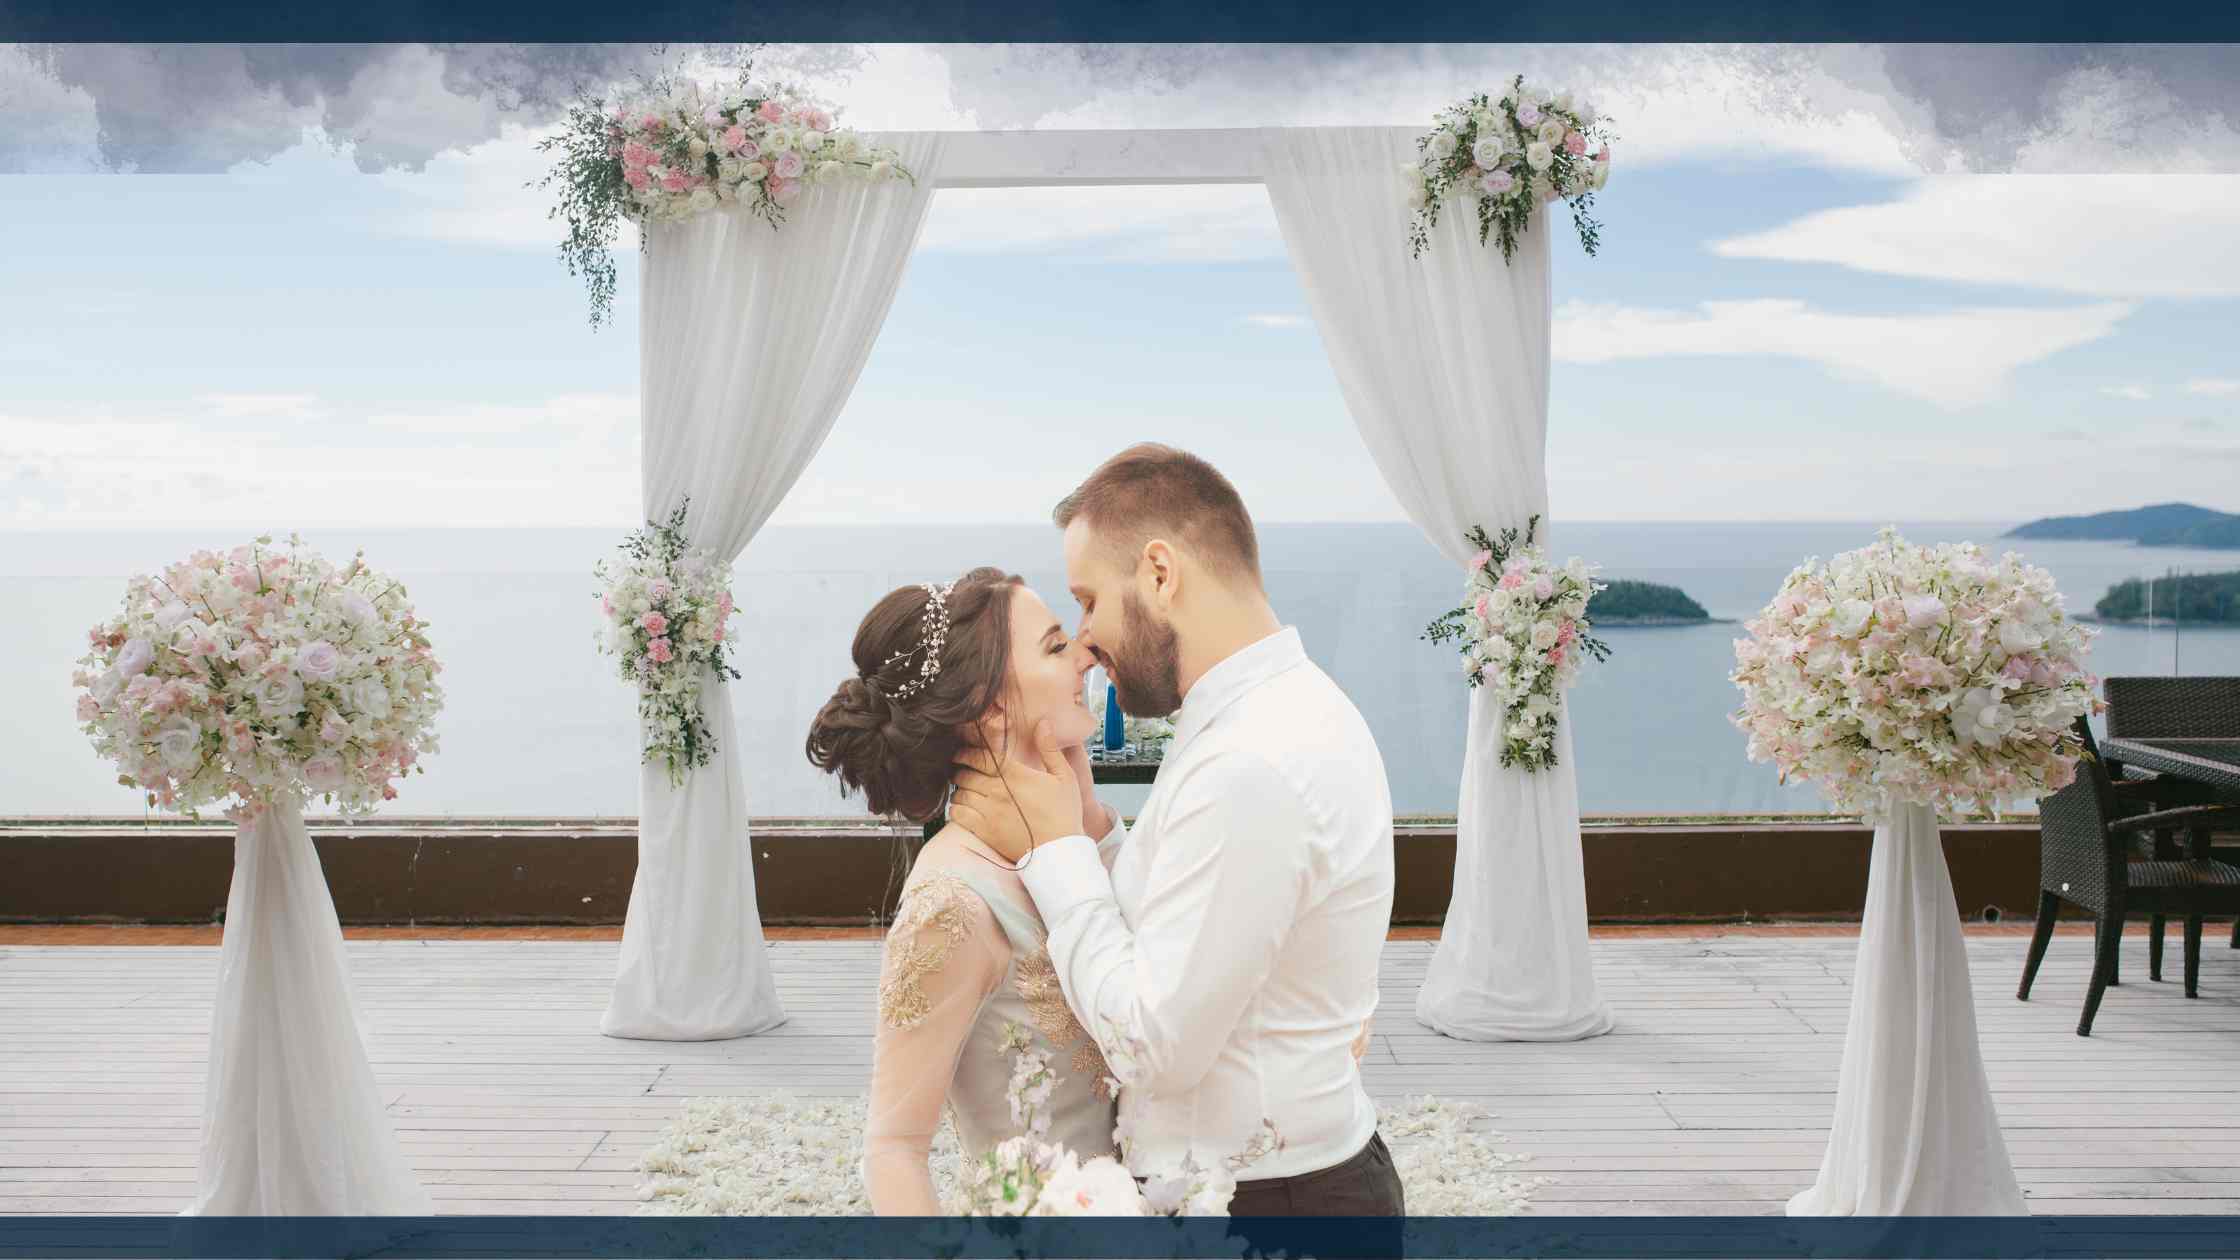 Miami Wedding Planning, Miami Wedding Photographers, Your Complete Wedding Planning Resource